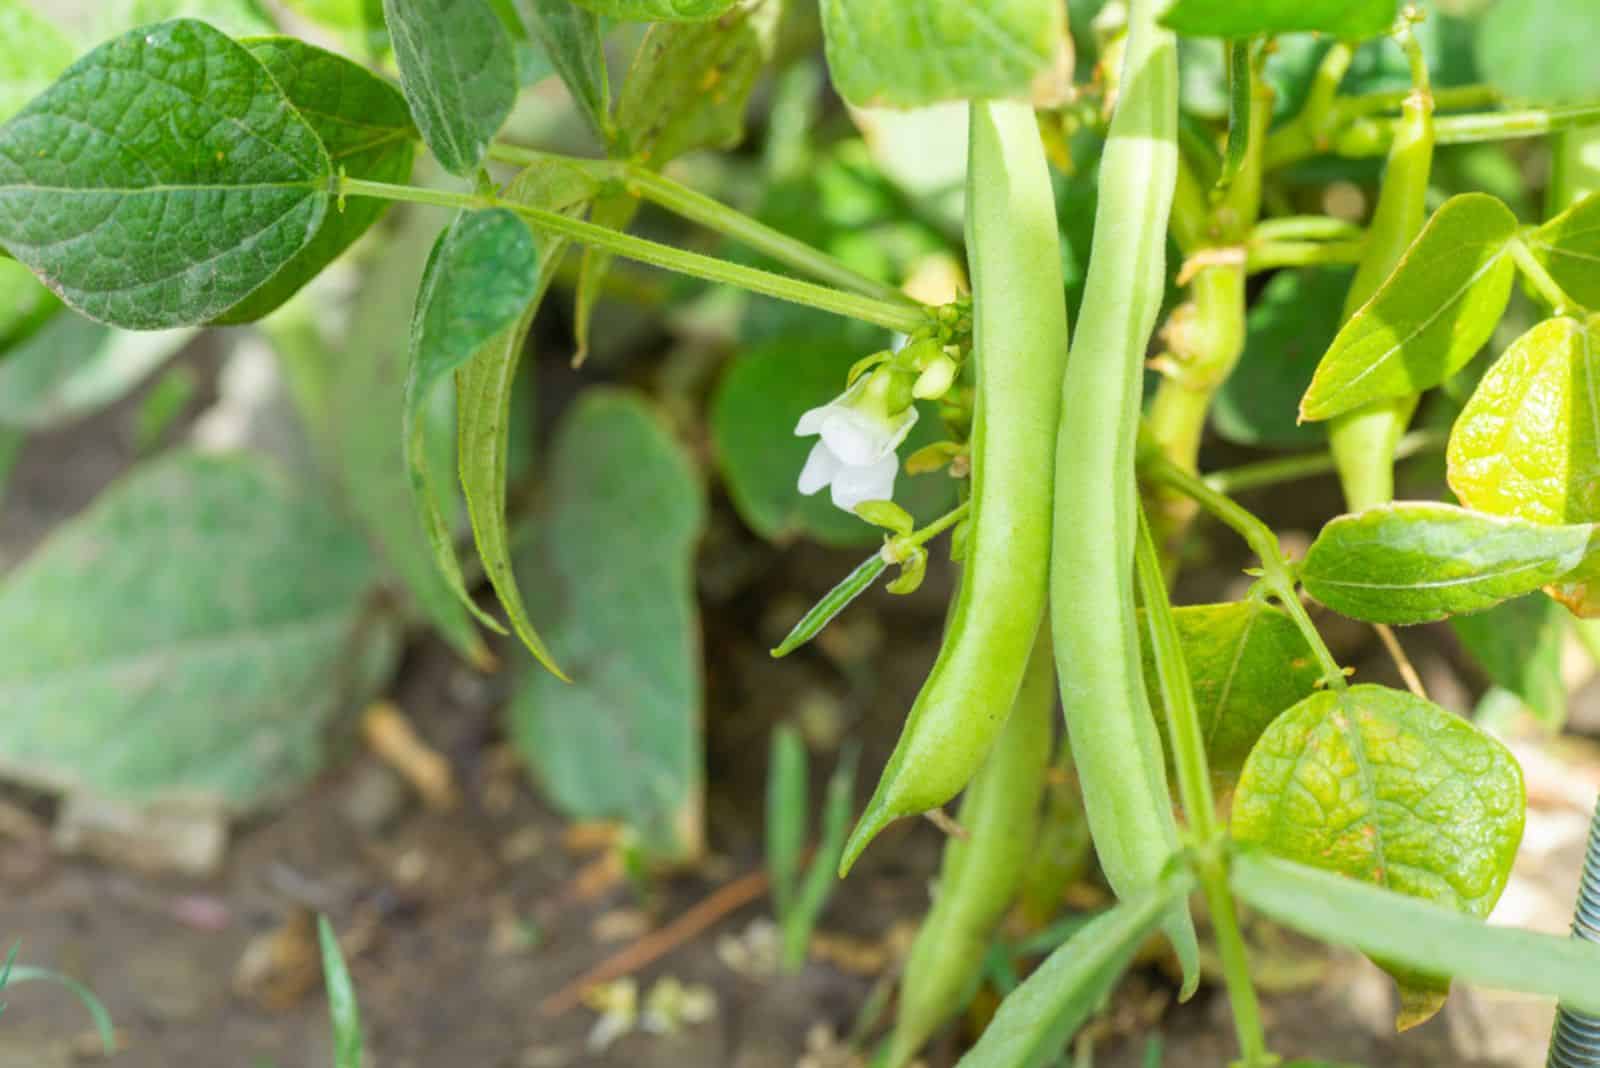 Green beans grow in the vegetable garden